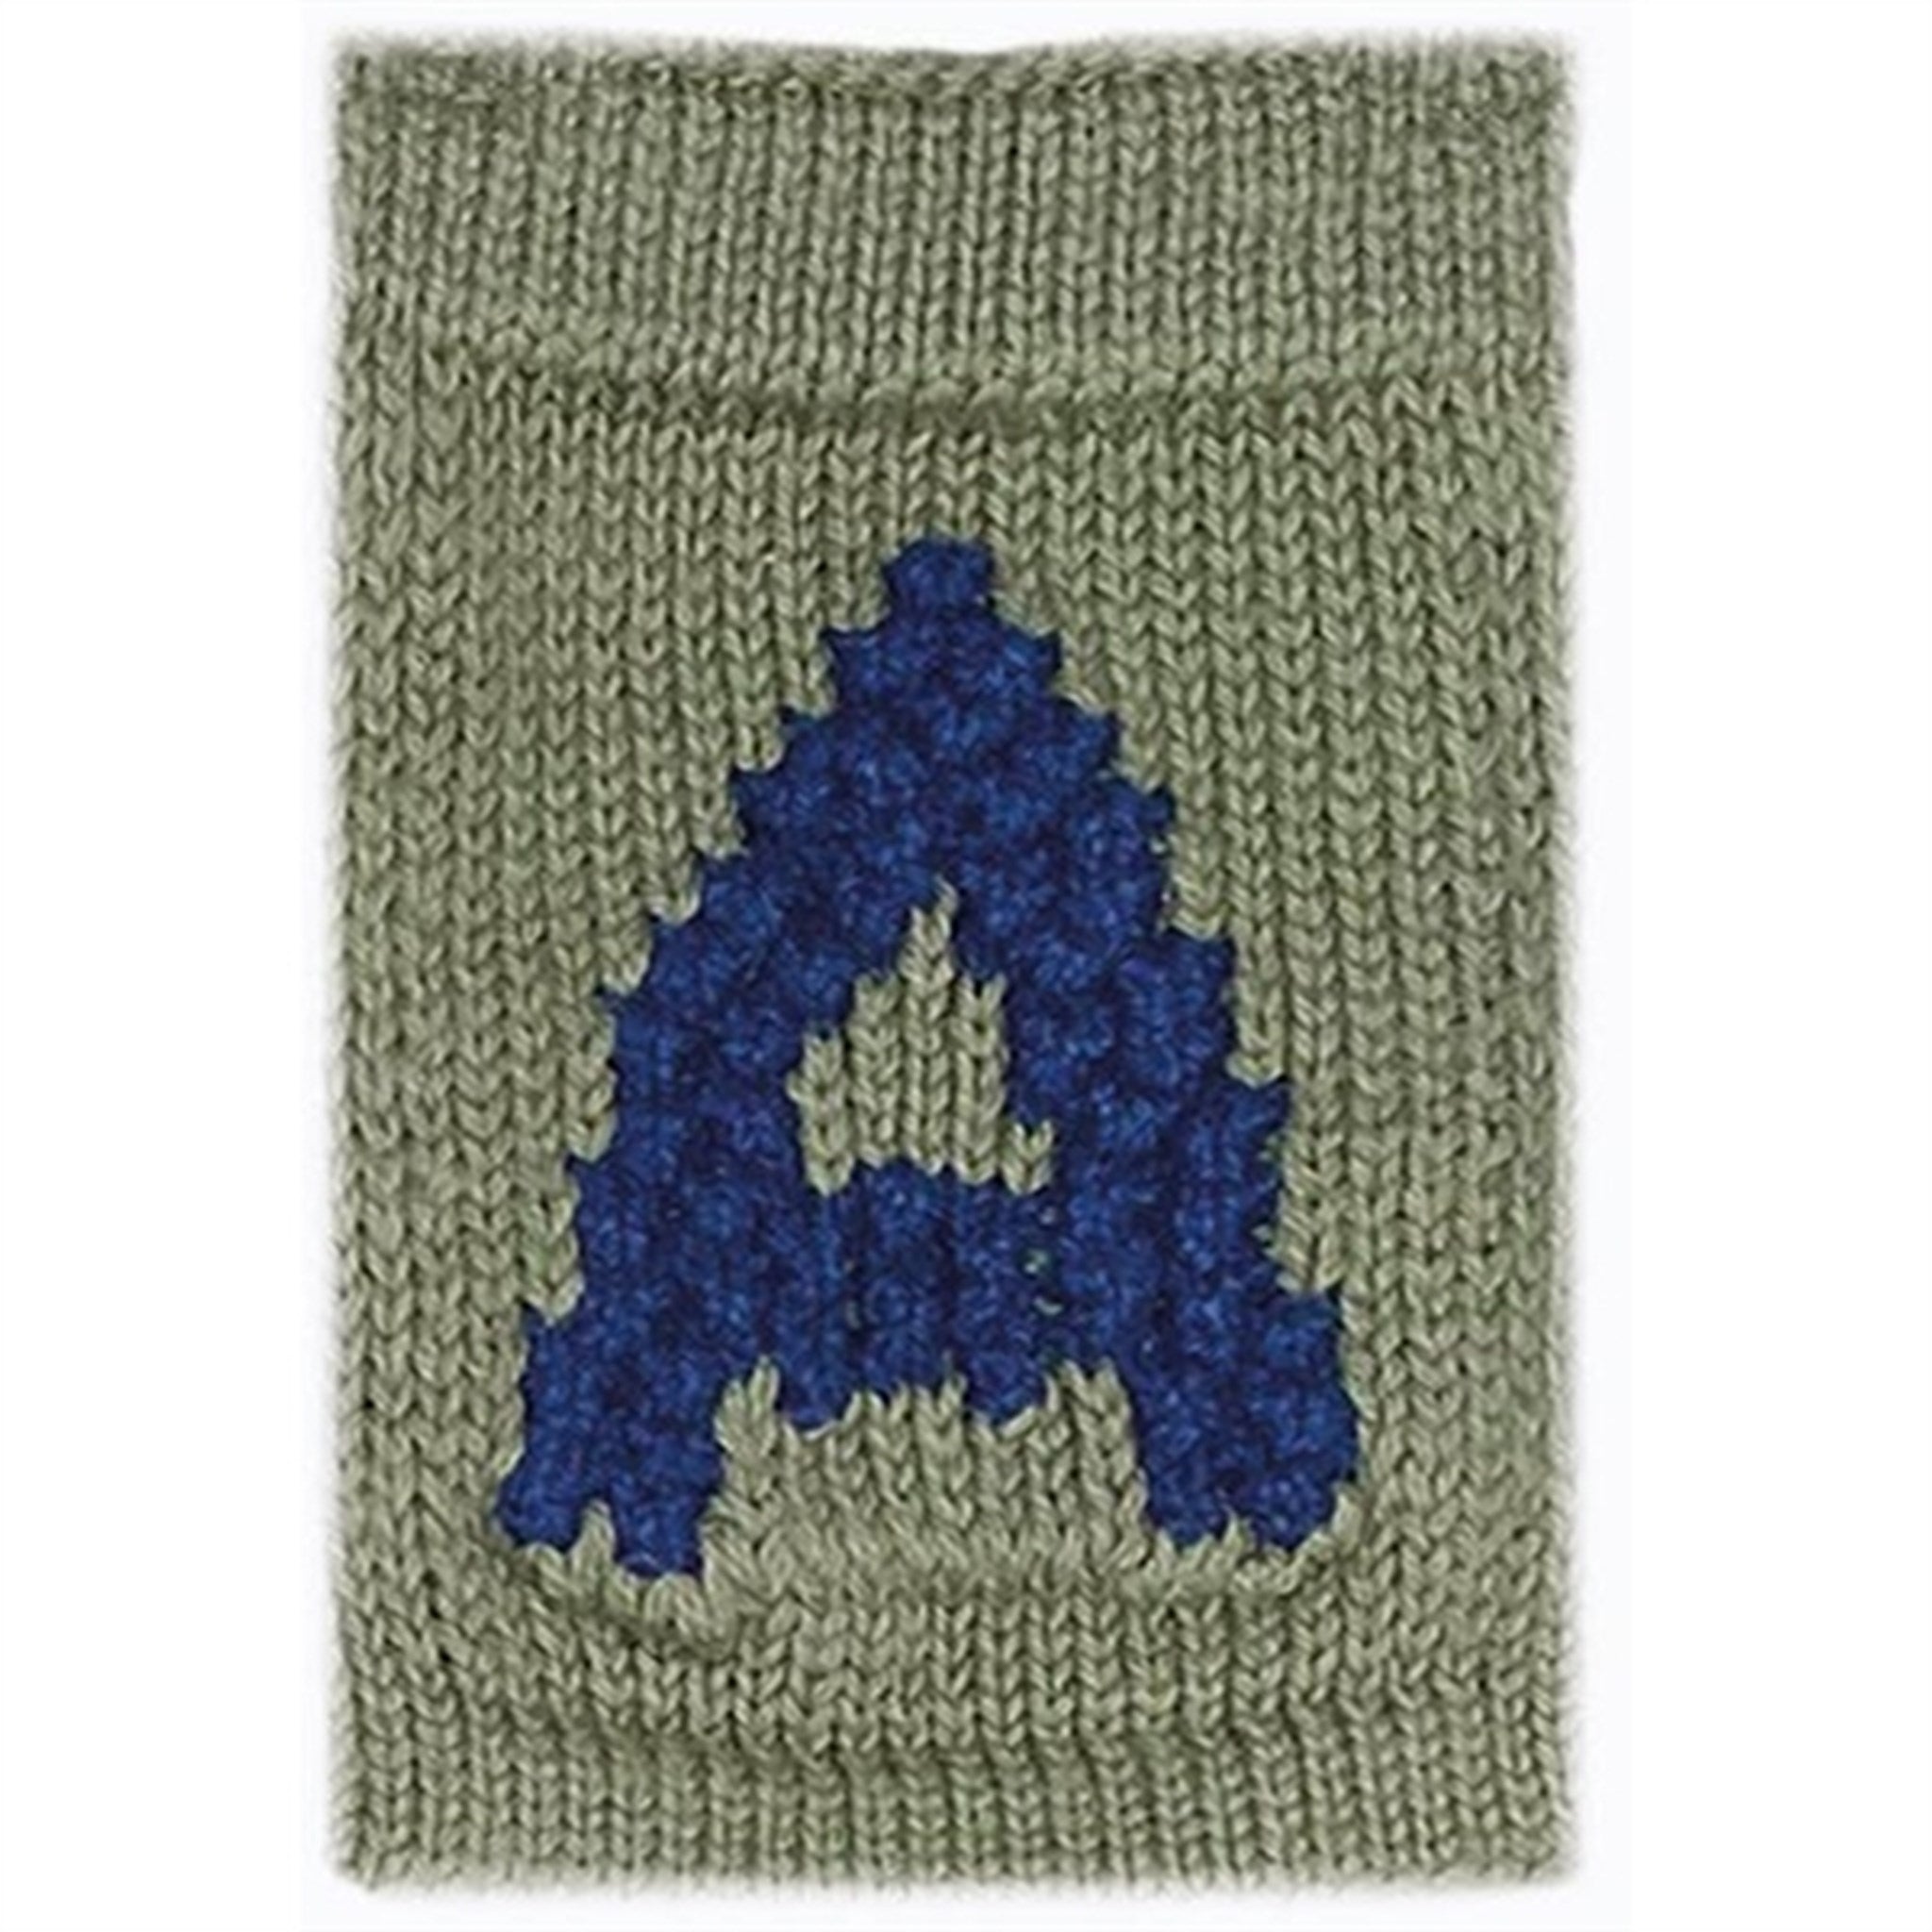 Smallstuff Knit Letter Blue